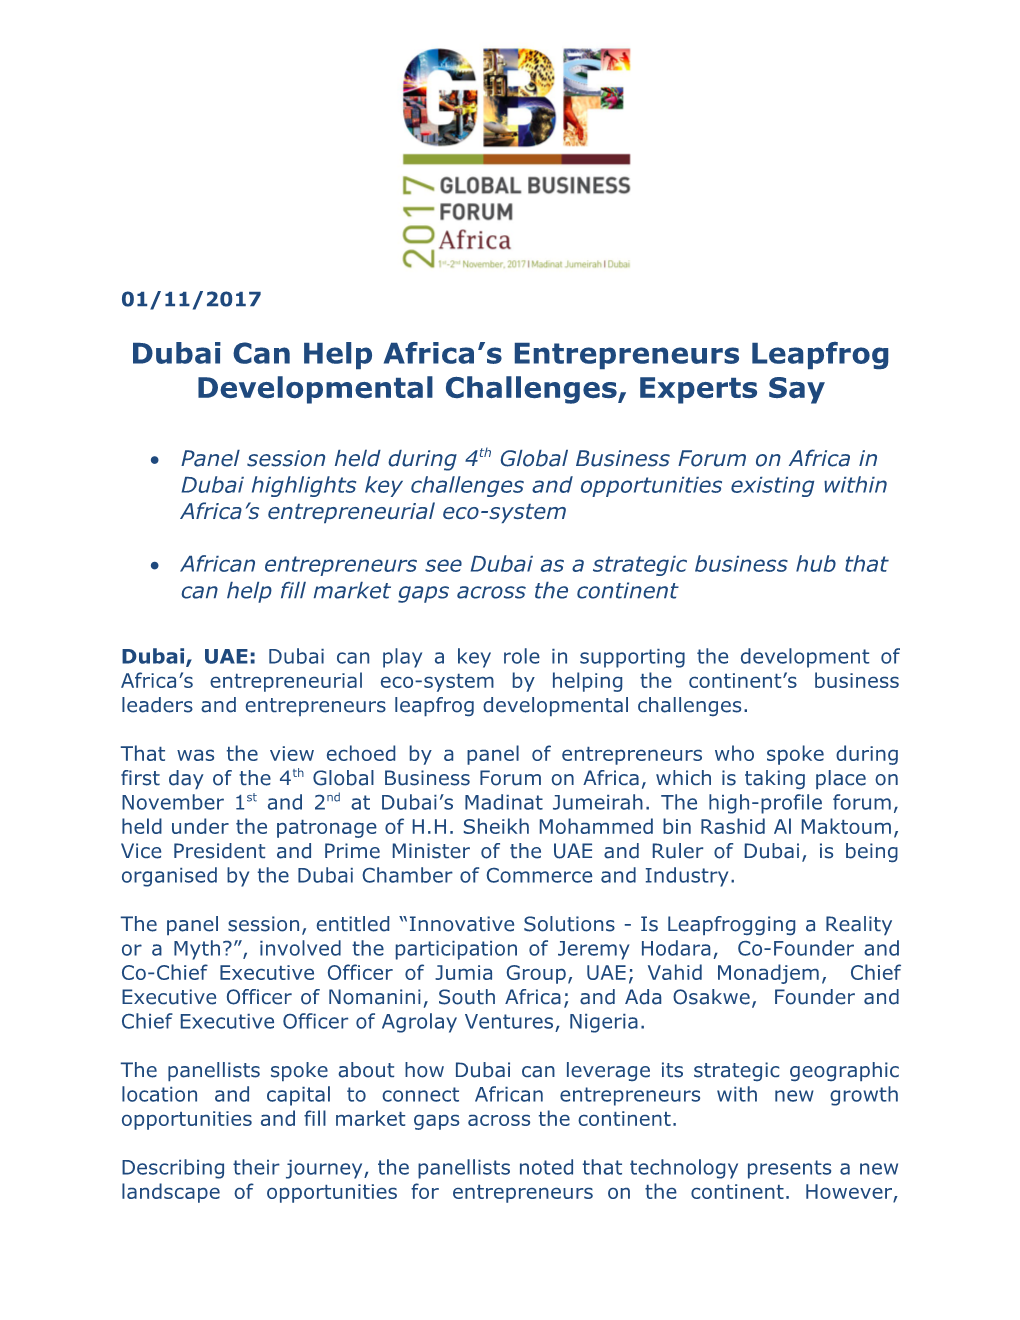 Dubai Can Help Africa S Entrepreneurs Leapfrog Developmental Challenges, Experts Say